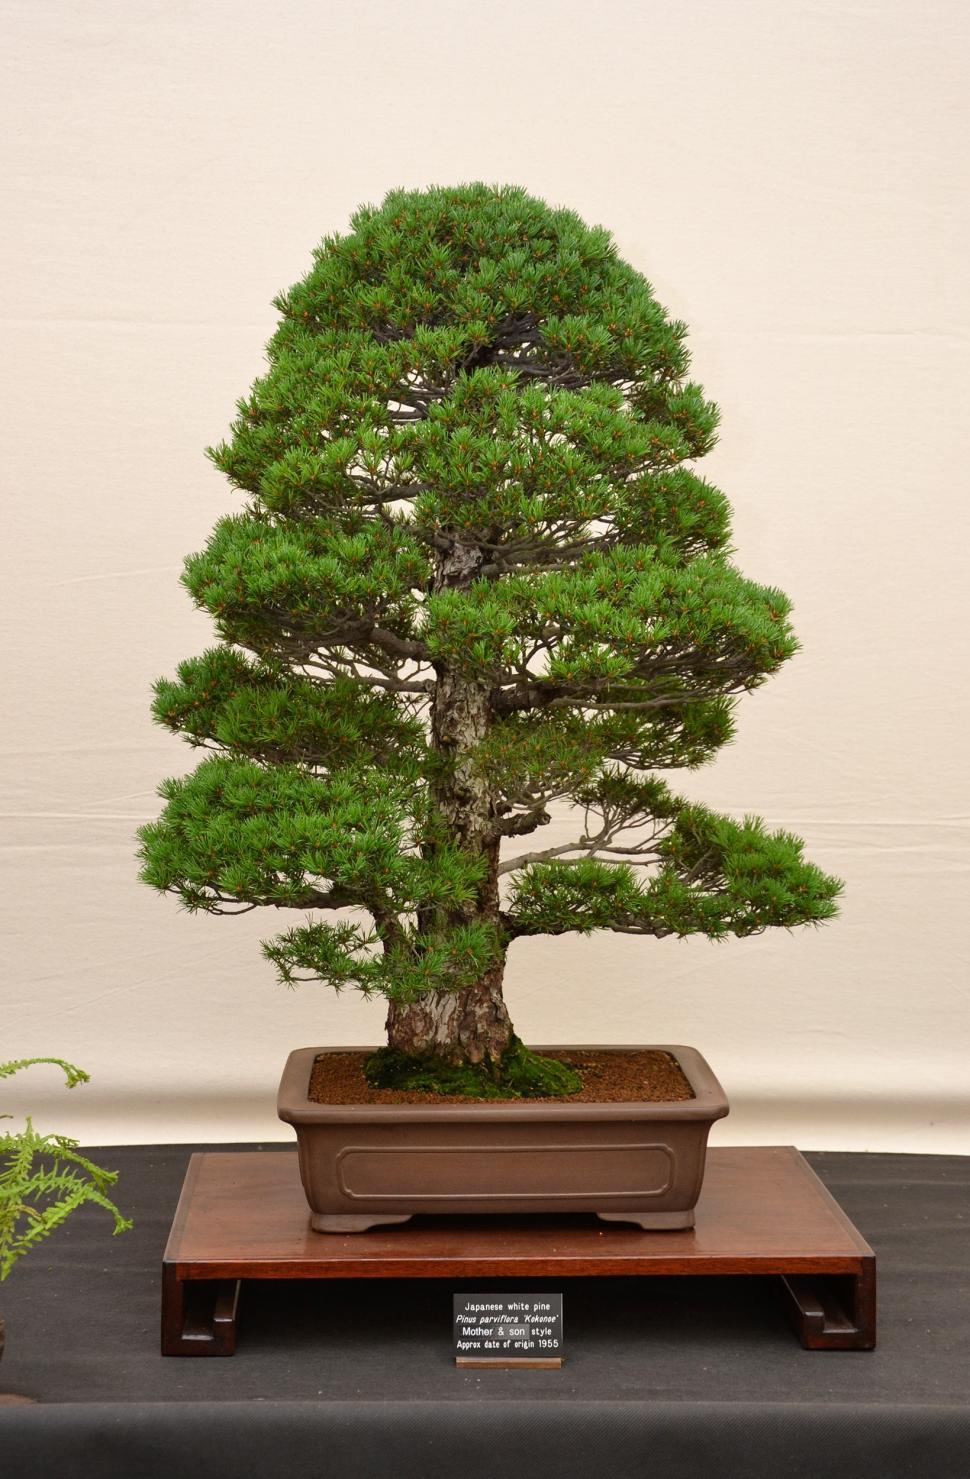 Download Free Stock Photo of Japanese white pine bonsai 